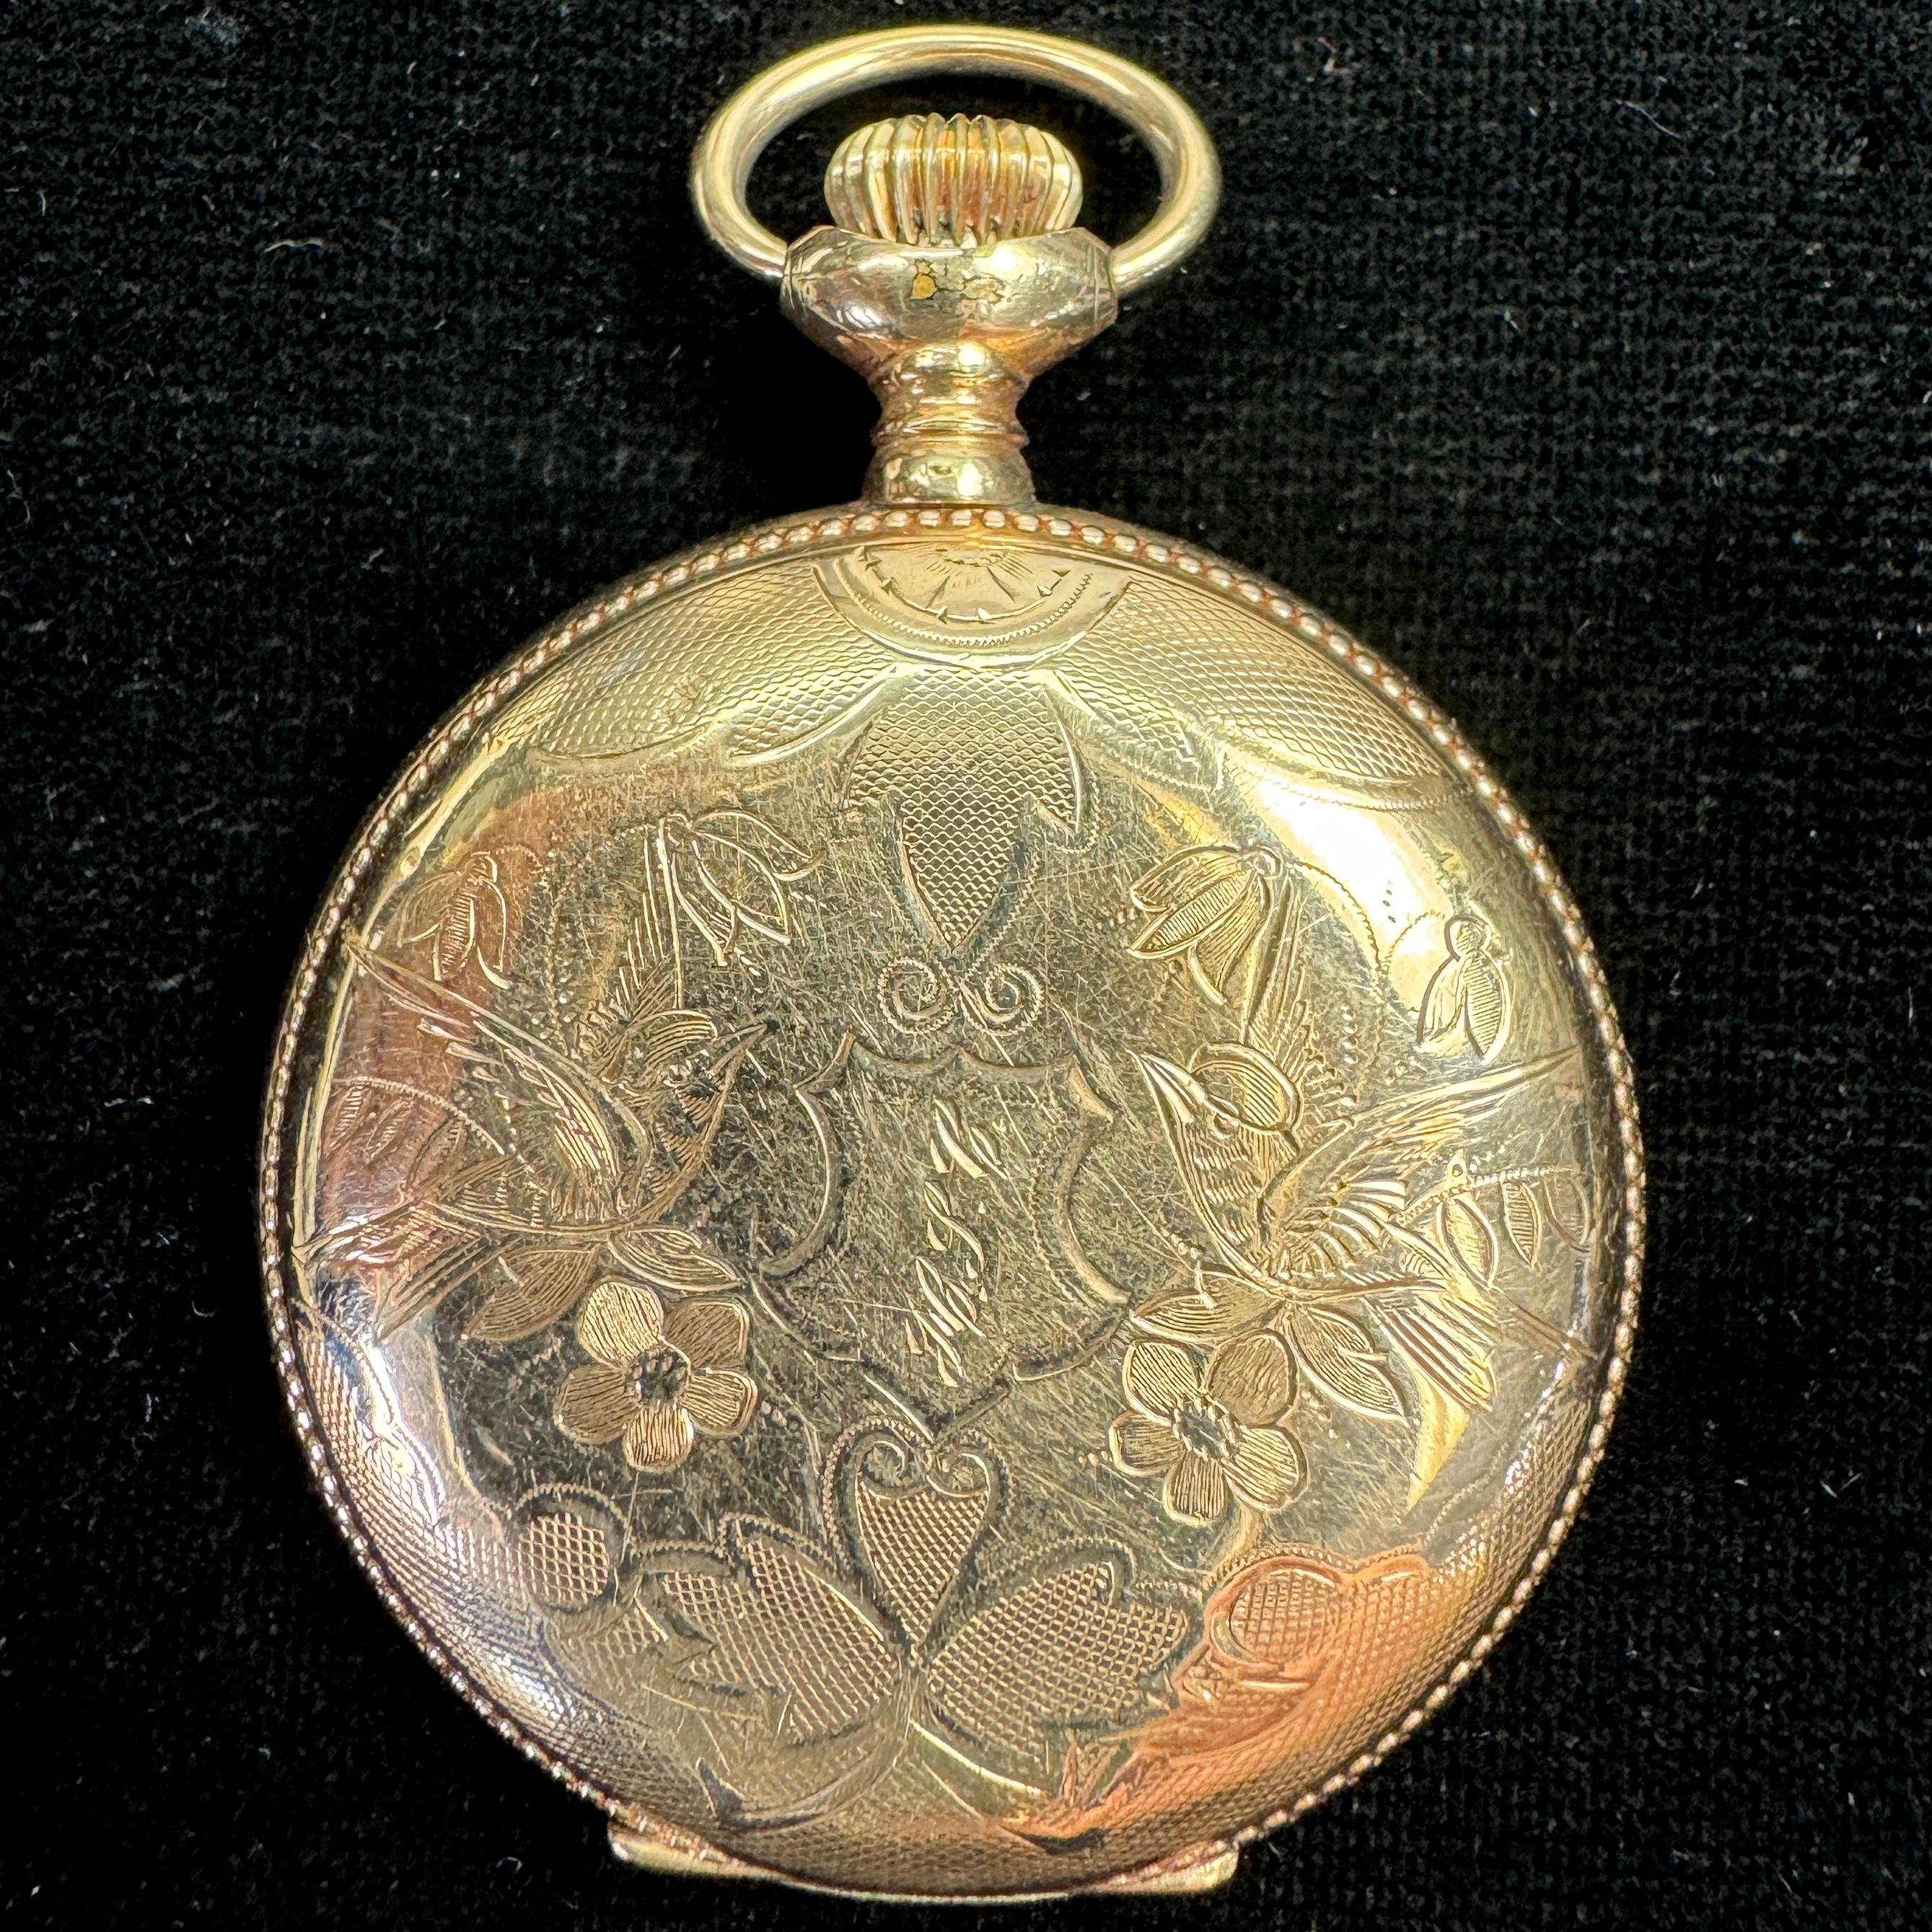 Circa 1905 15-jewel Elgin model 2 covered pocket watch